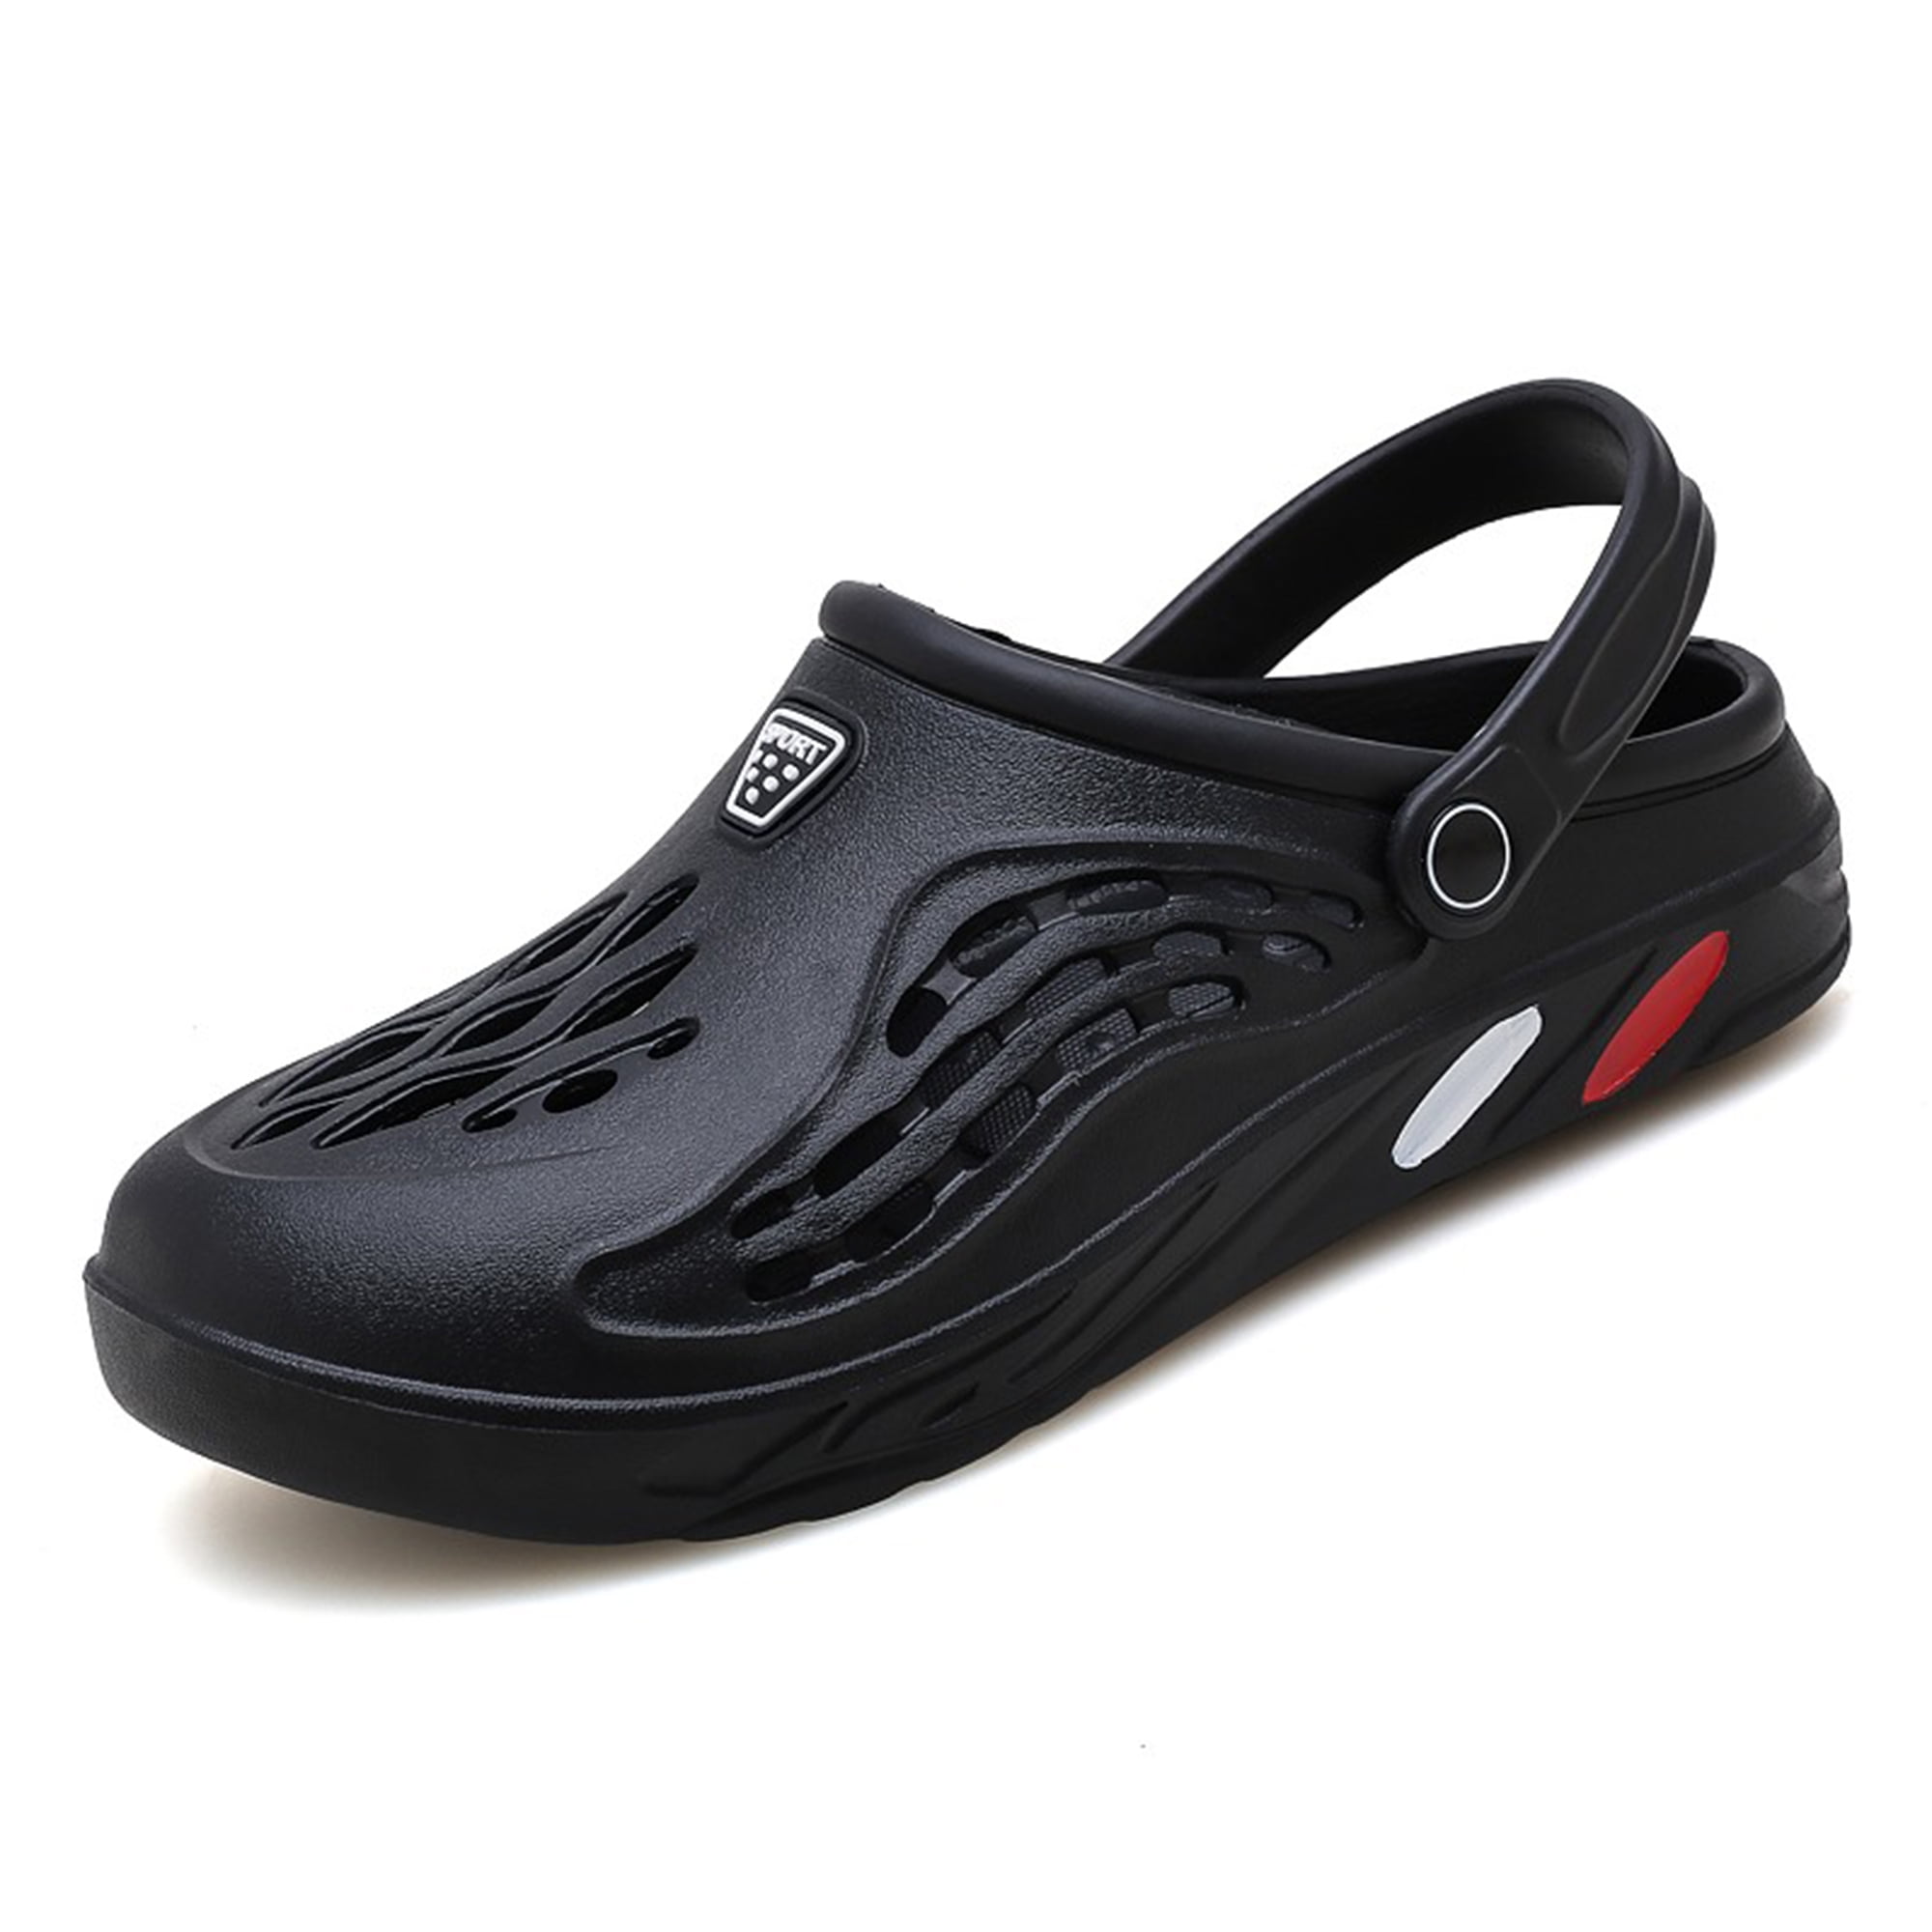 Unisex Garden Clogs Shoes Slippers Sandals for Women and Men - Walmart.com